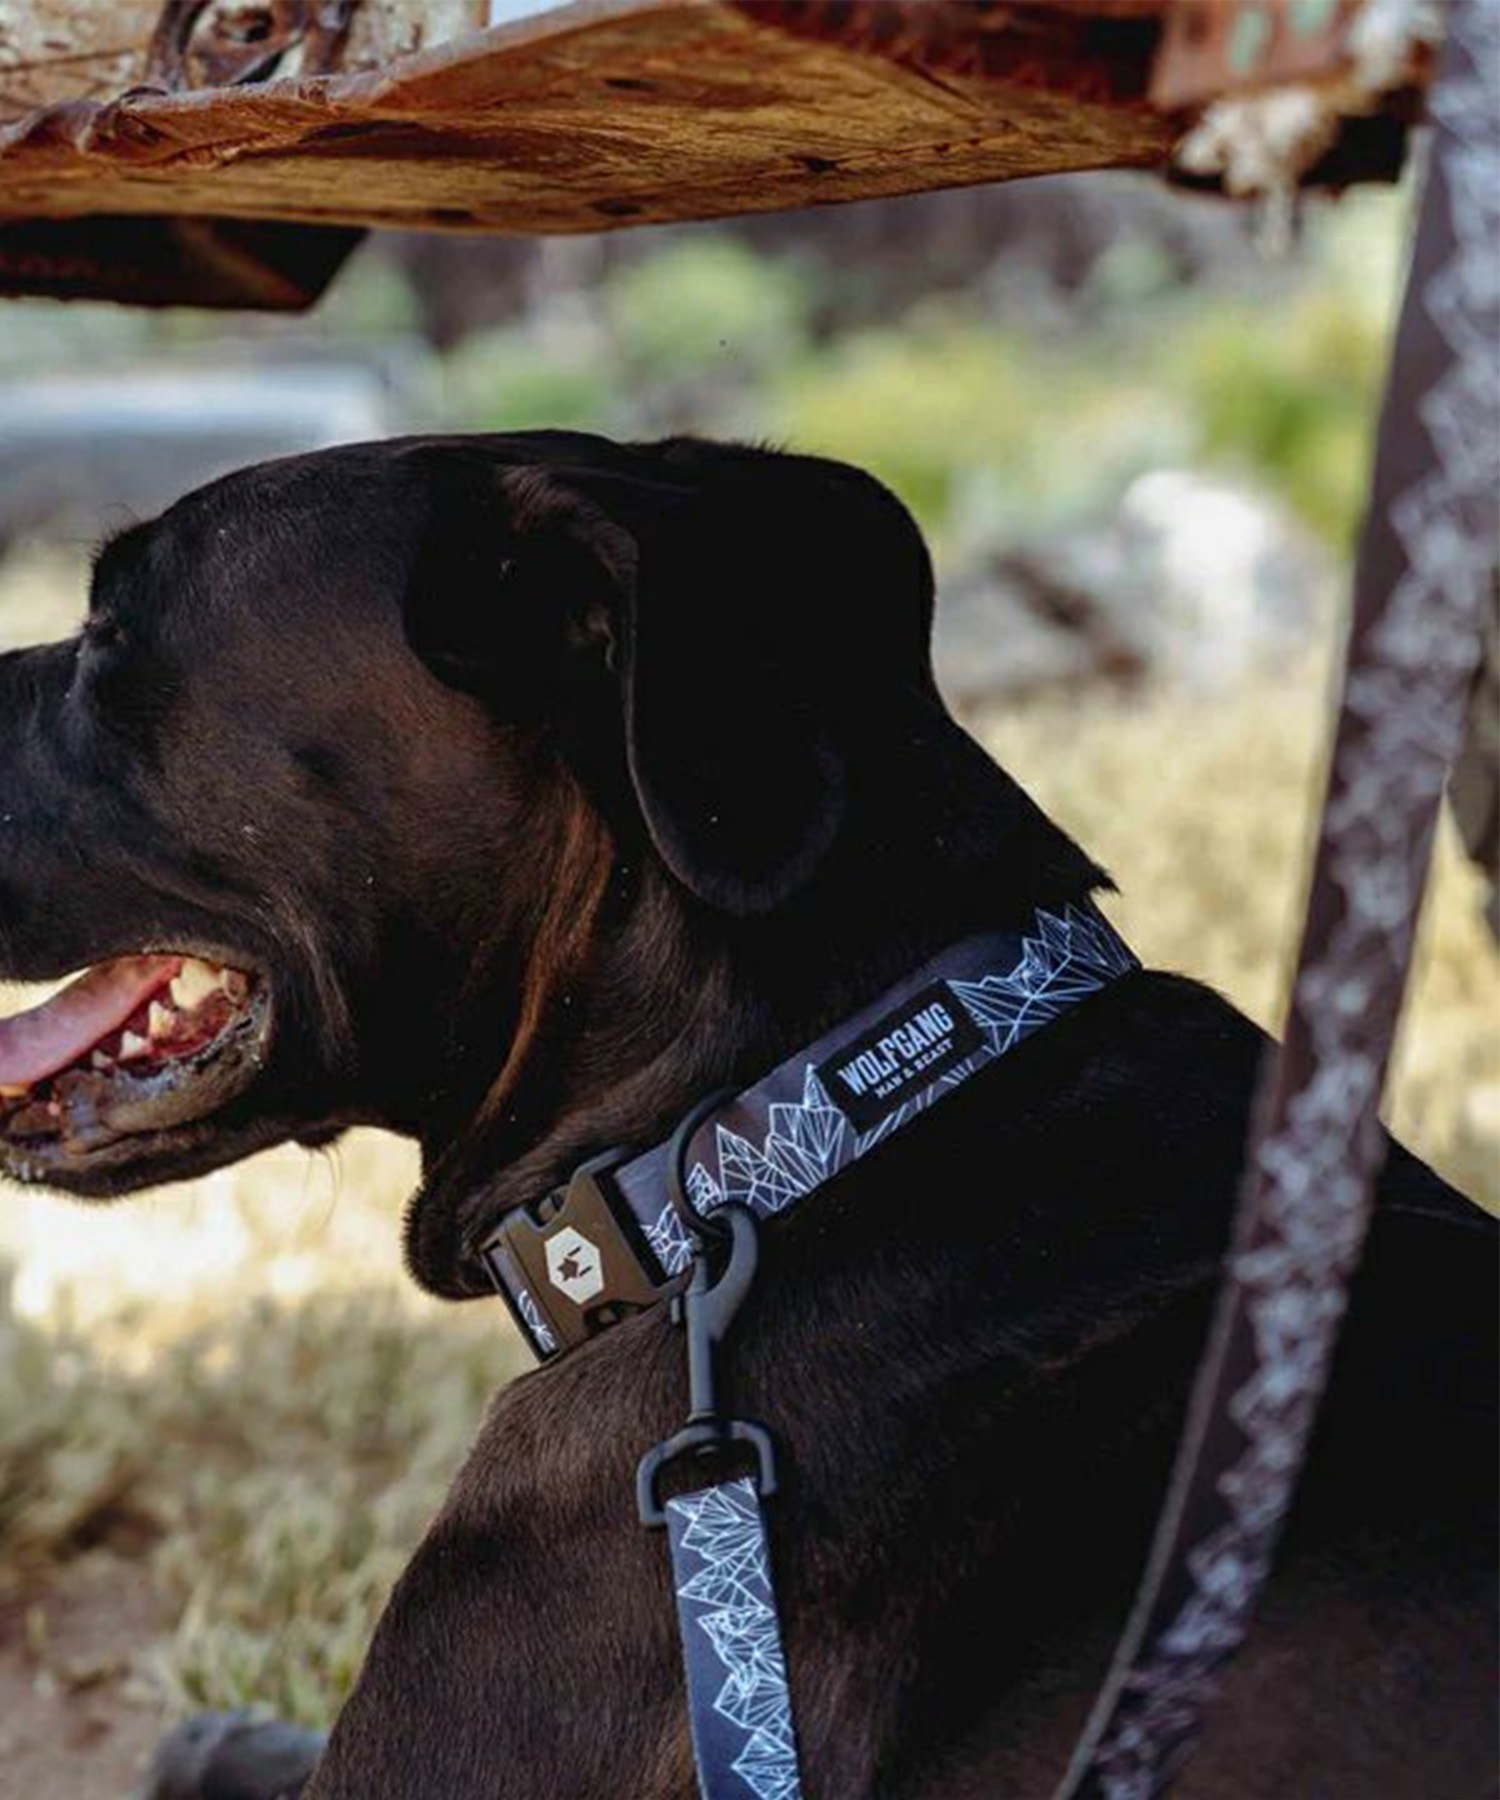 WOLFGANG ウルフギャング 犬用 リード WolfMountain Leash Mサイズ 中型犬用 大型犬用 ウルフマウンテン リーシュ グレー系 WL-002-83(GY-M)